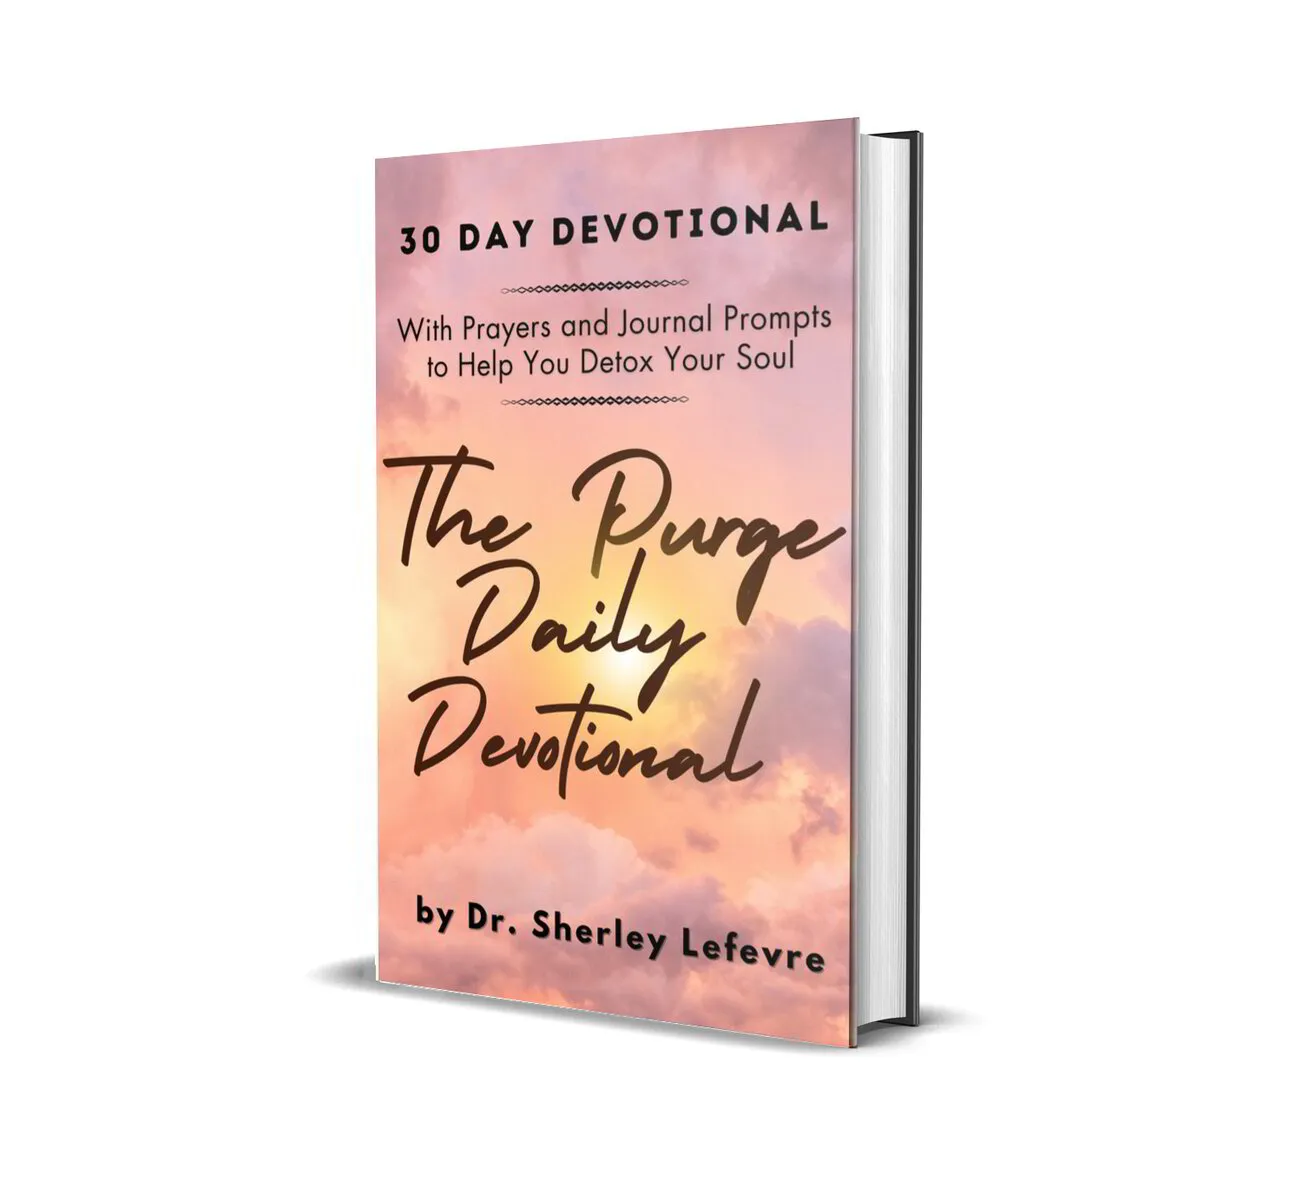 The Purge Daily Devotional (E-book)